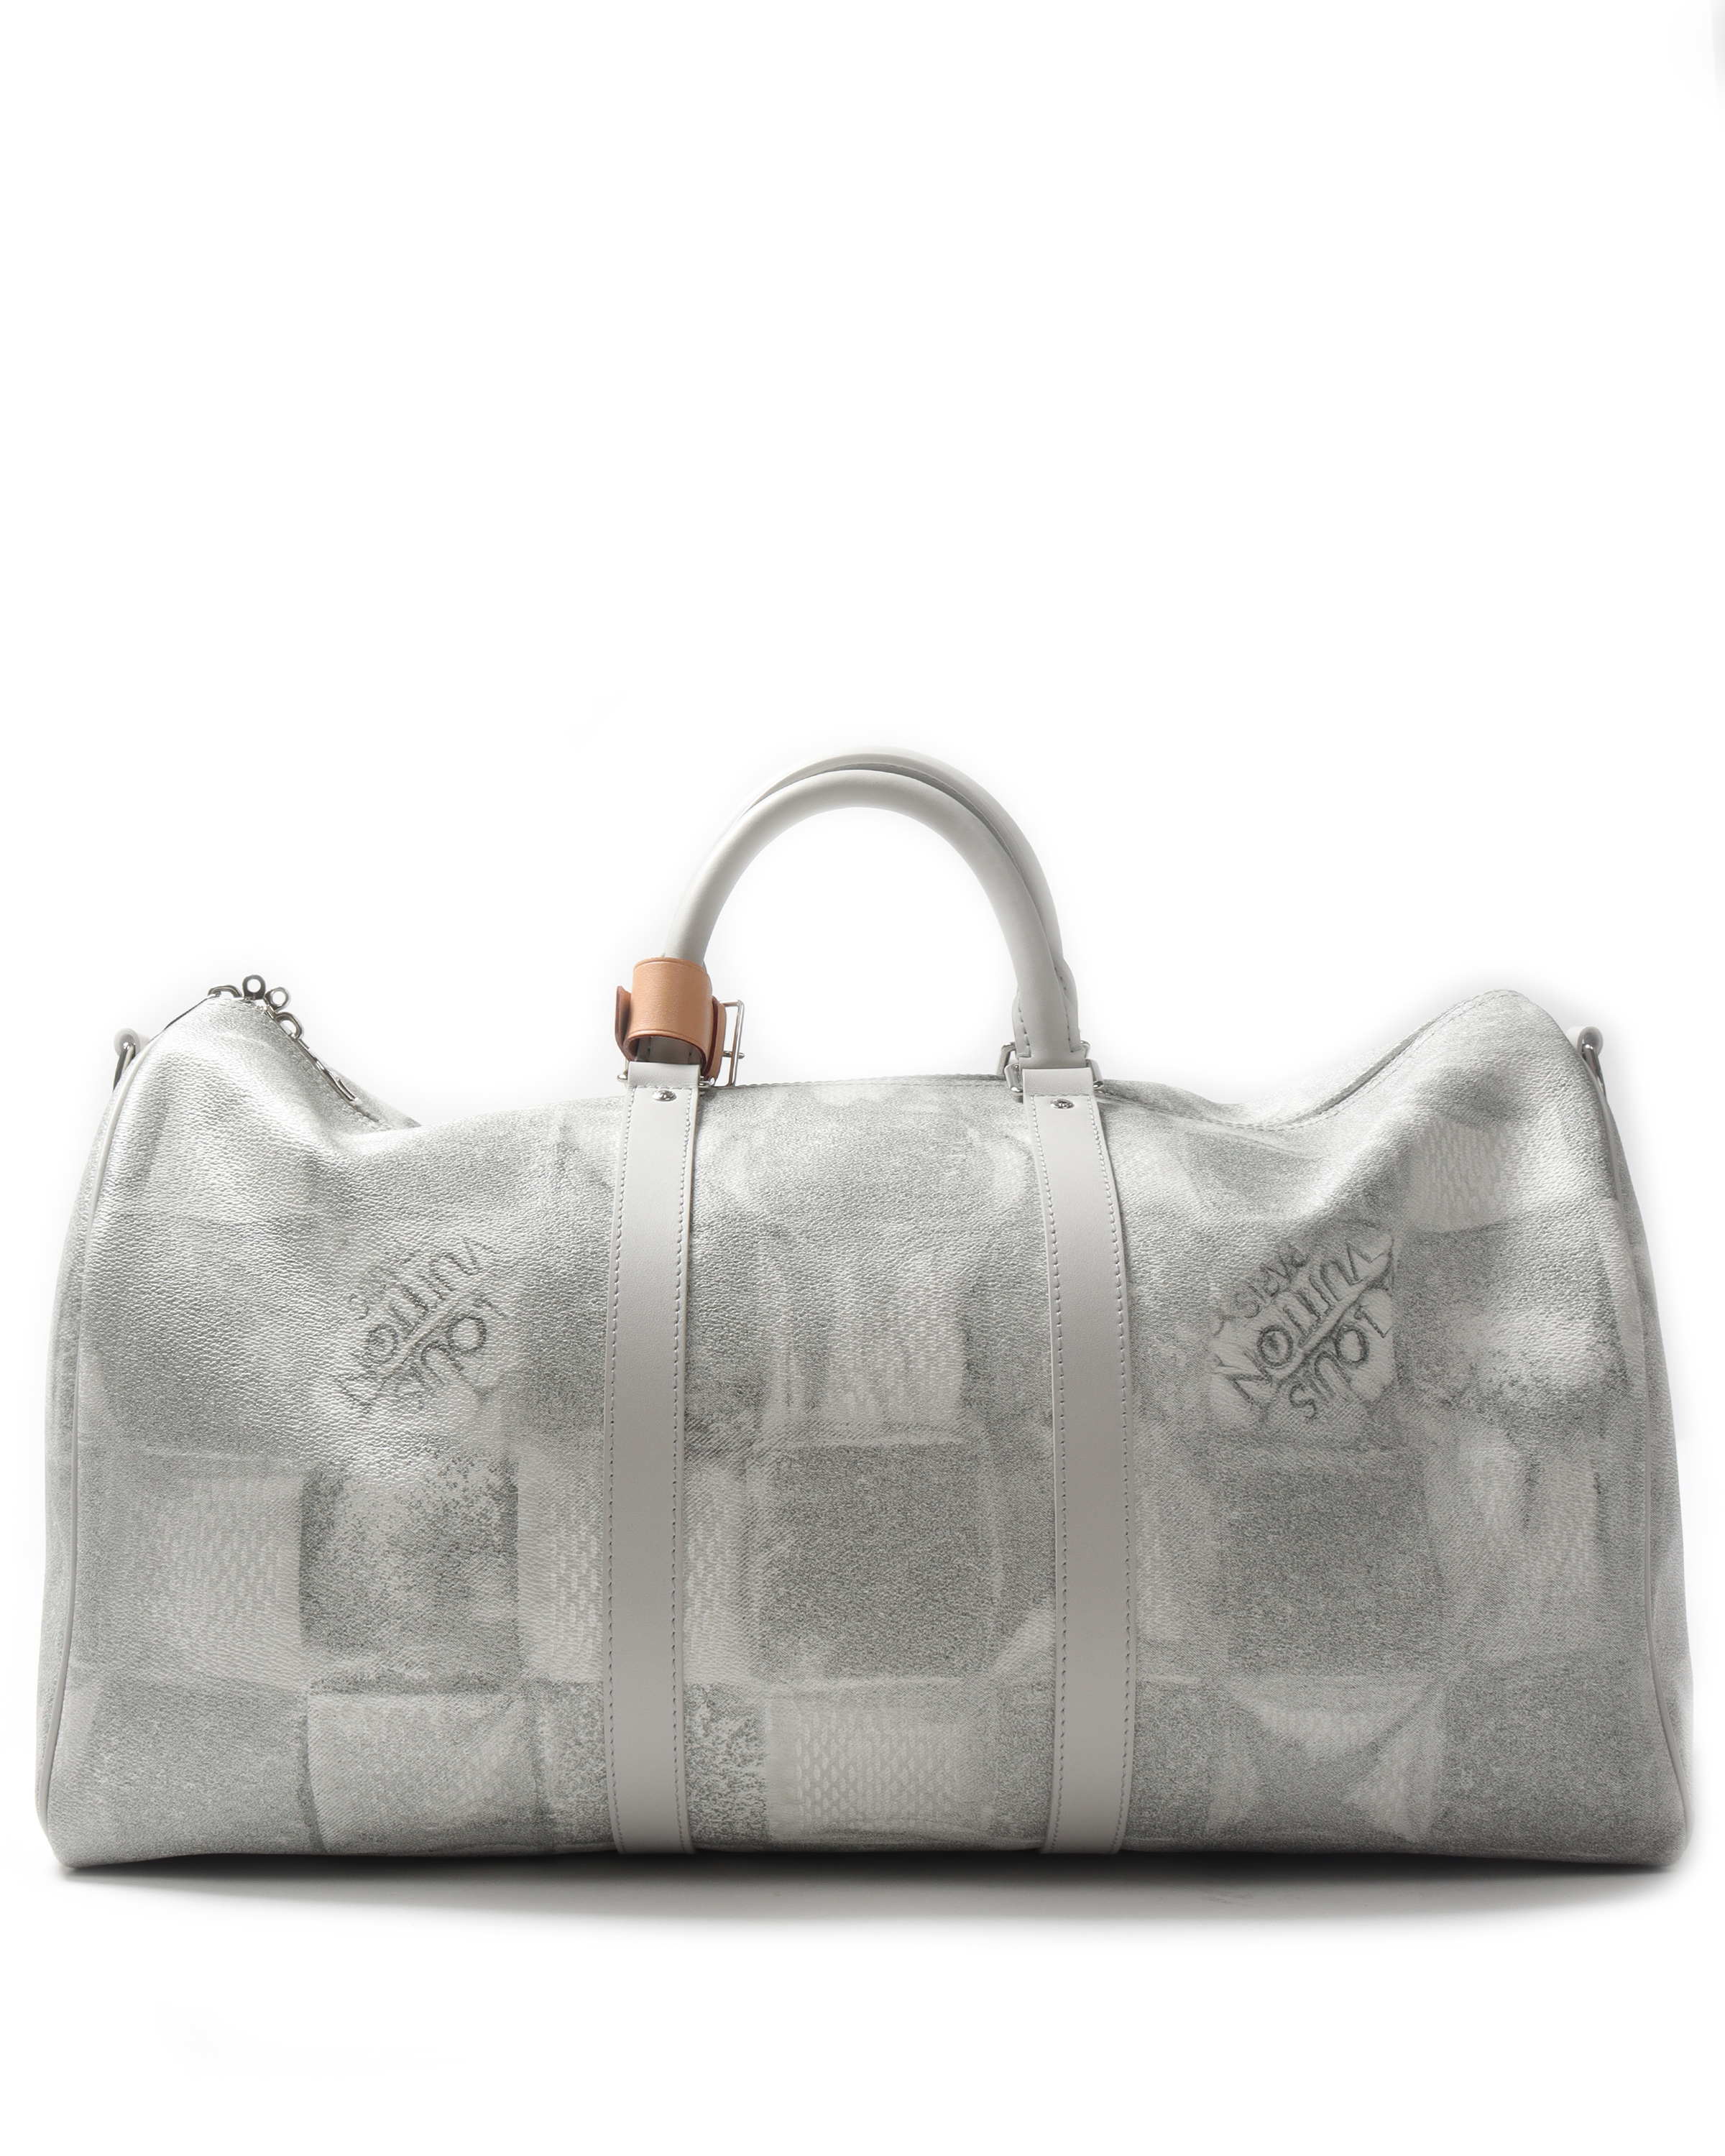 Luxury Handbags LOUIS VUITTON White Canvas Small Duffel 810-00385 -  Mazzarese Jewelry